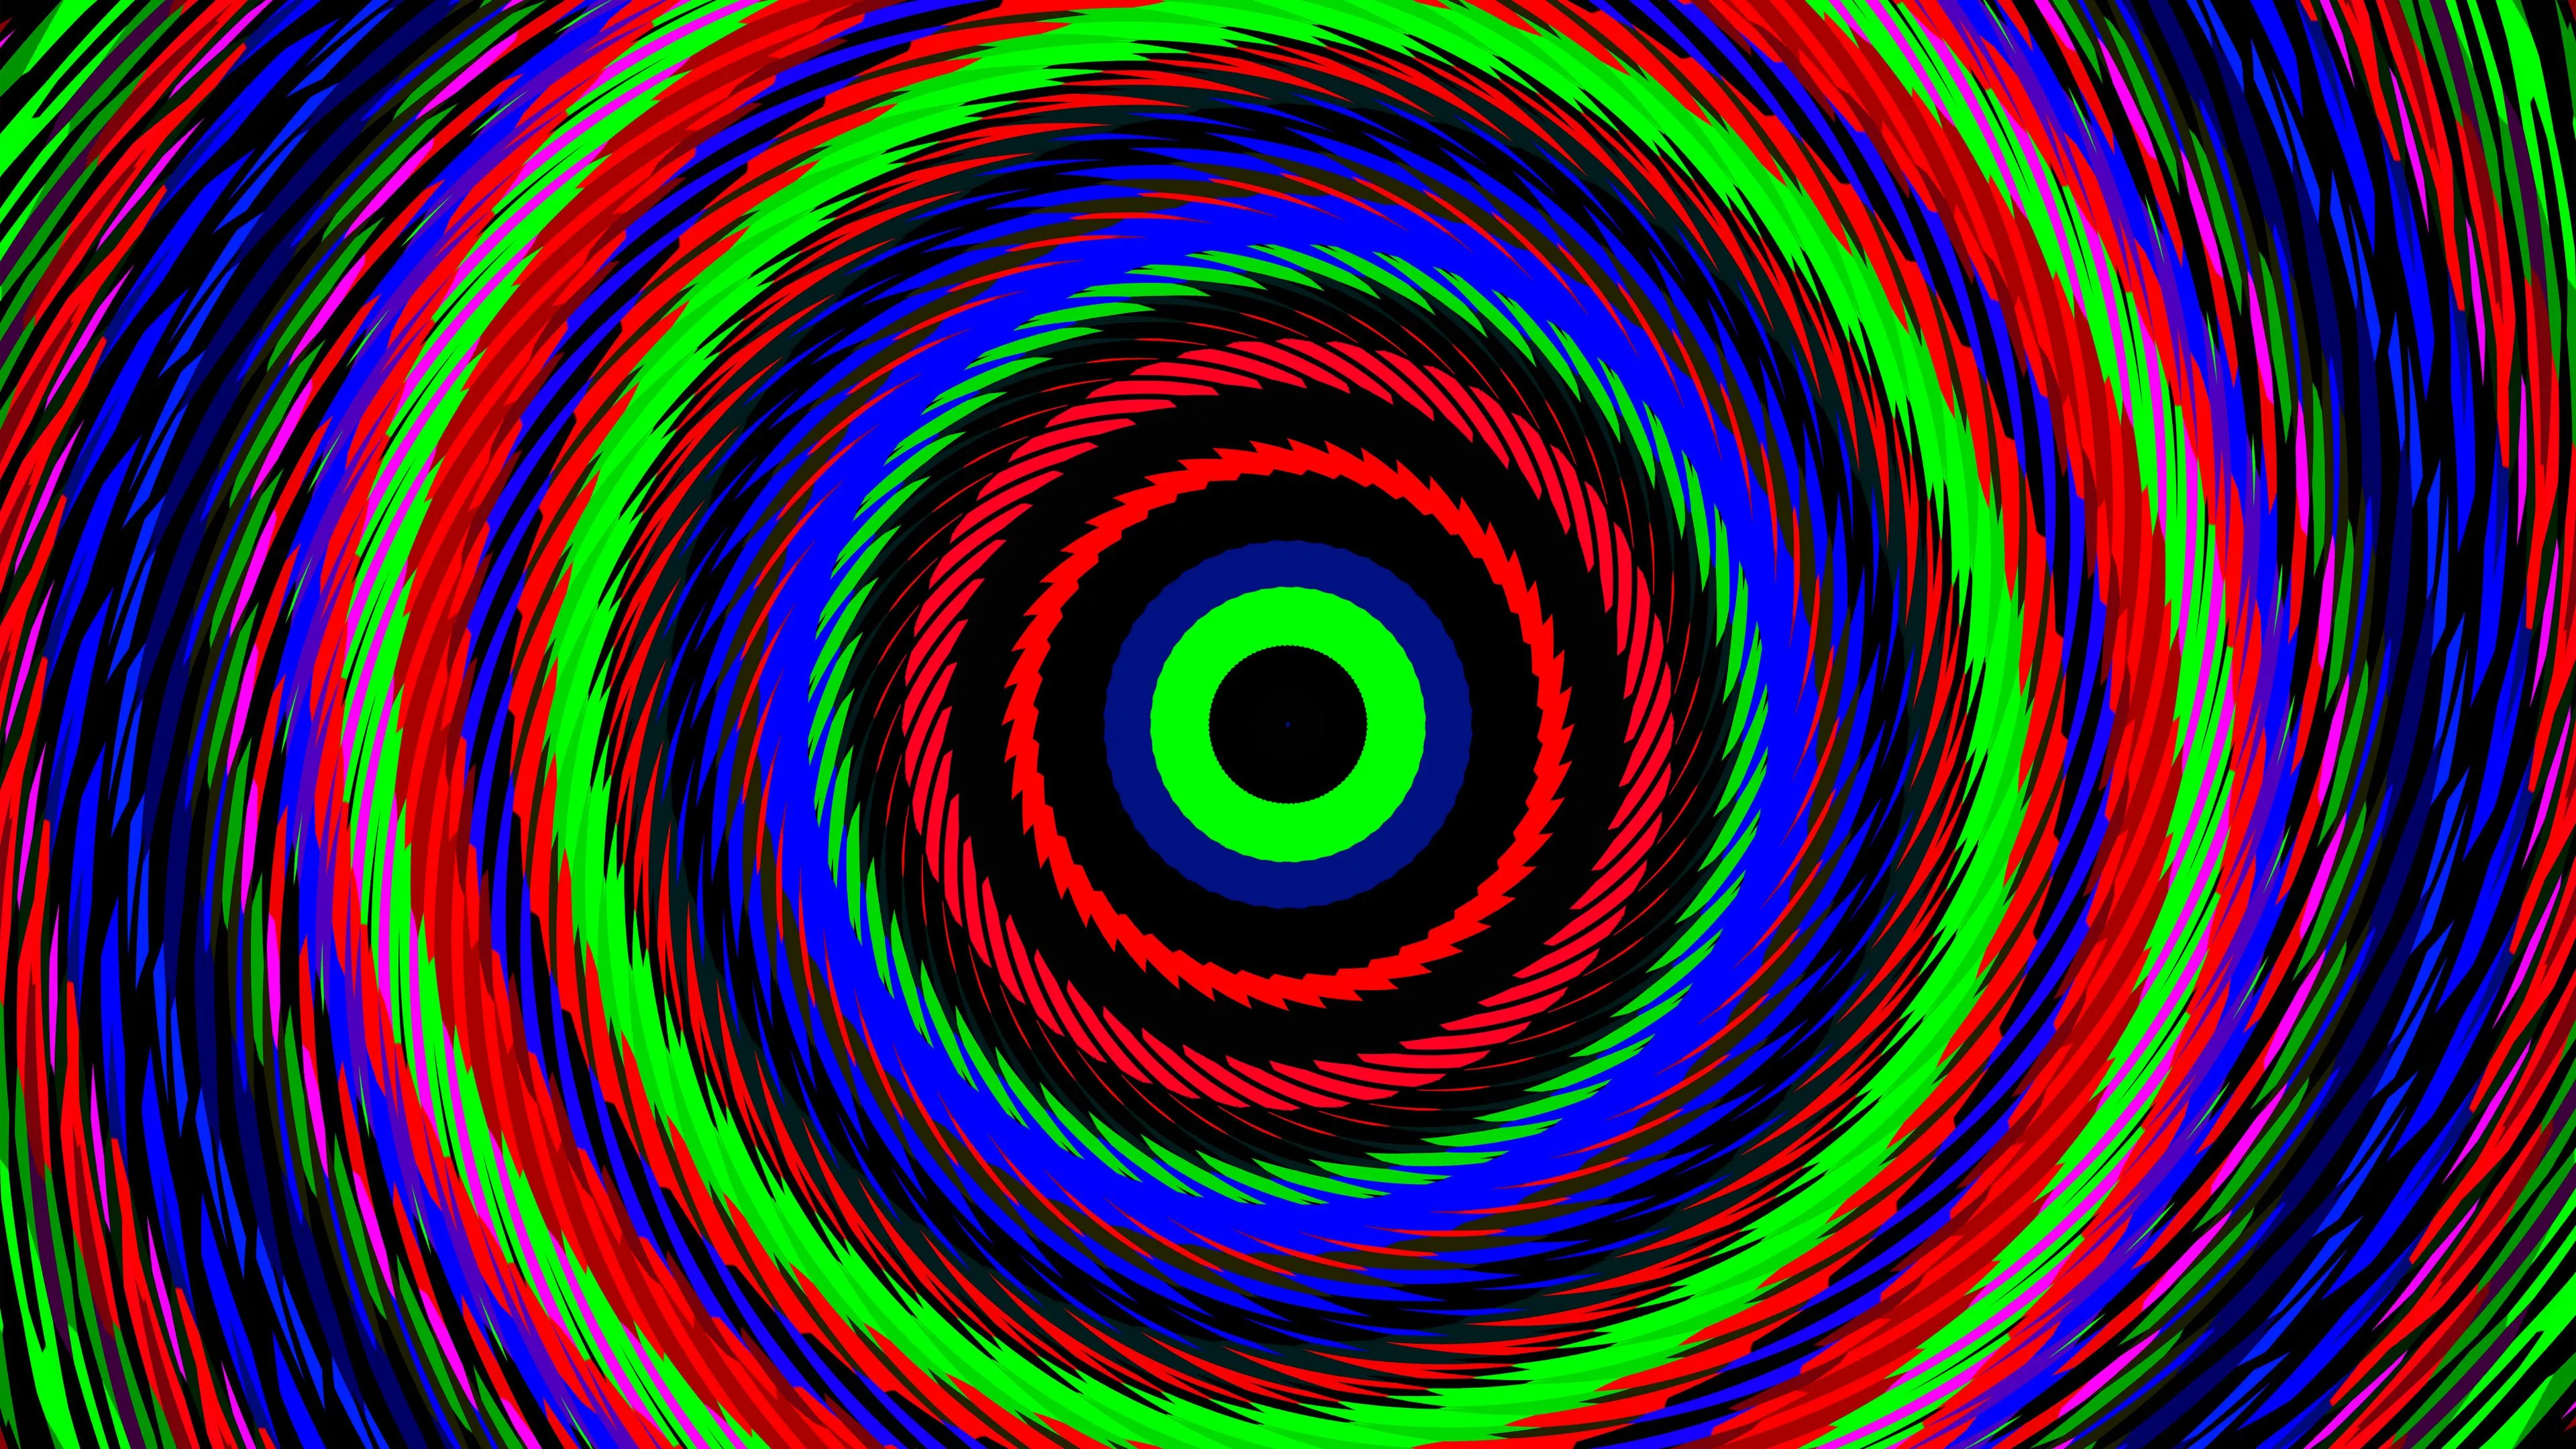 circles optical illusion colorful abstraction 4k 1691670468